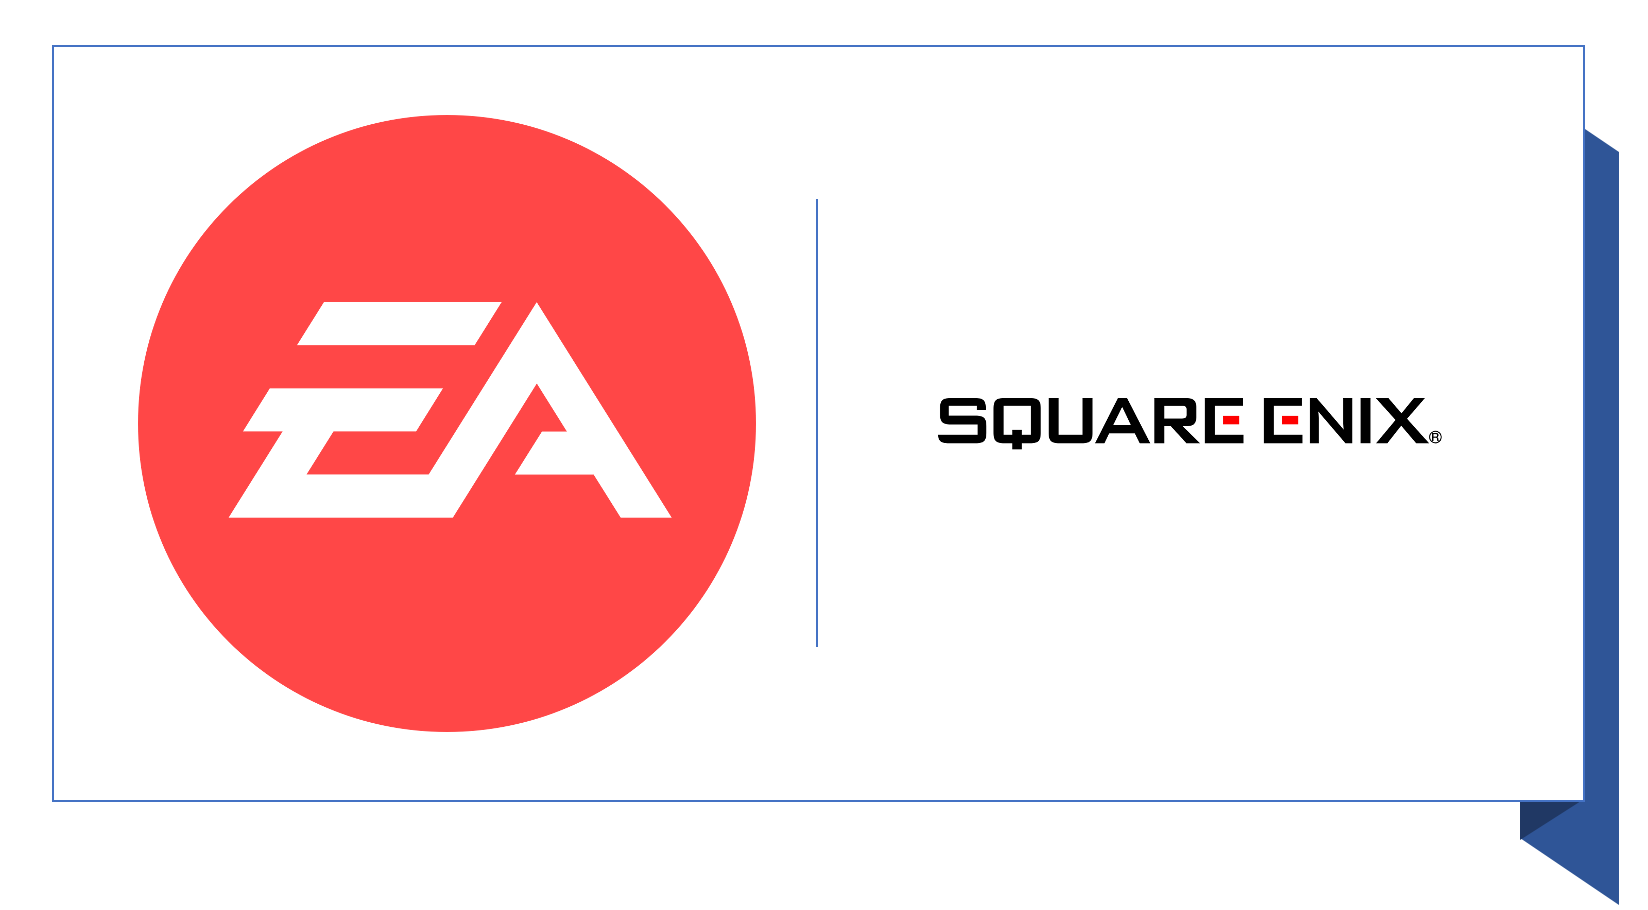 EA Square Enix